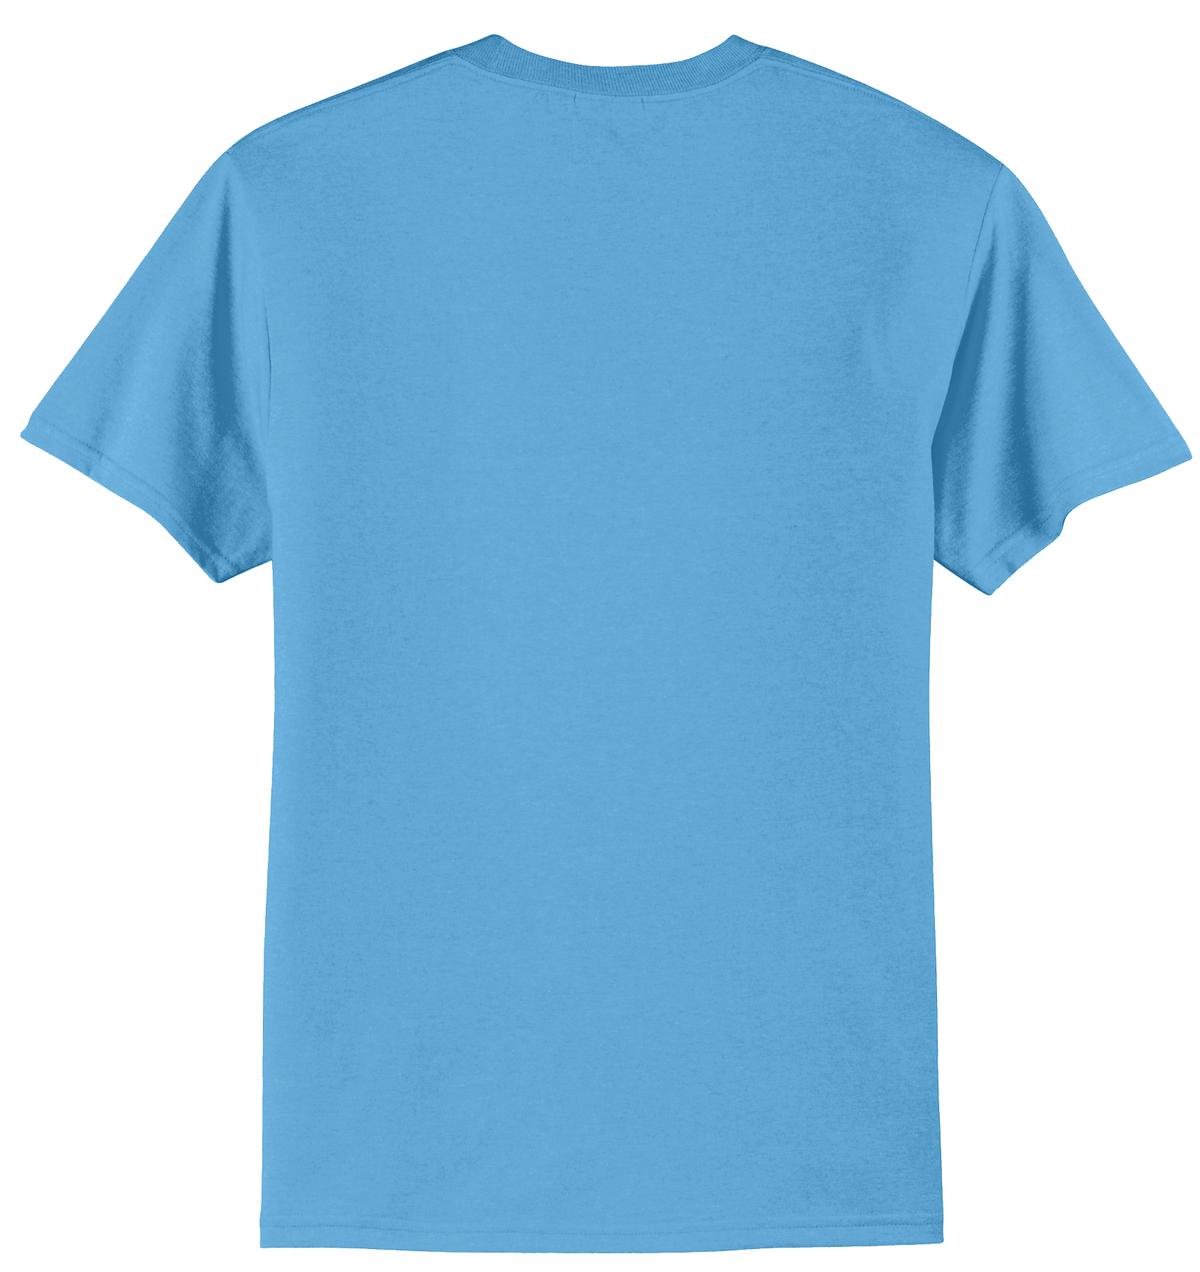 Swaasi Core - P&C® 5.5 oz 50/50 T-Shirt with Print Logo